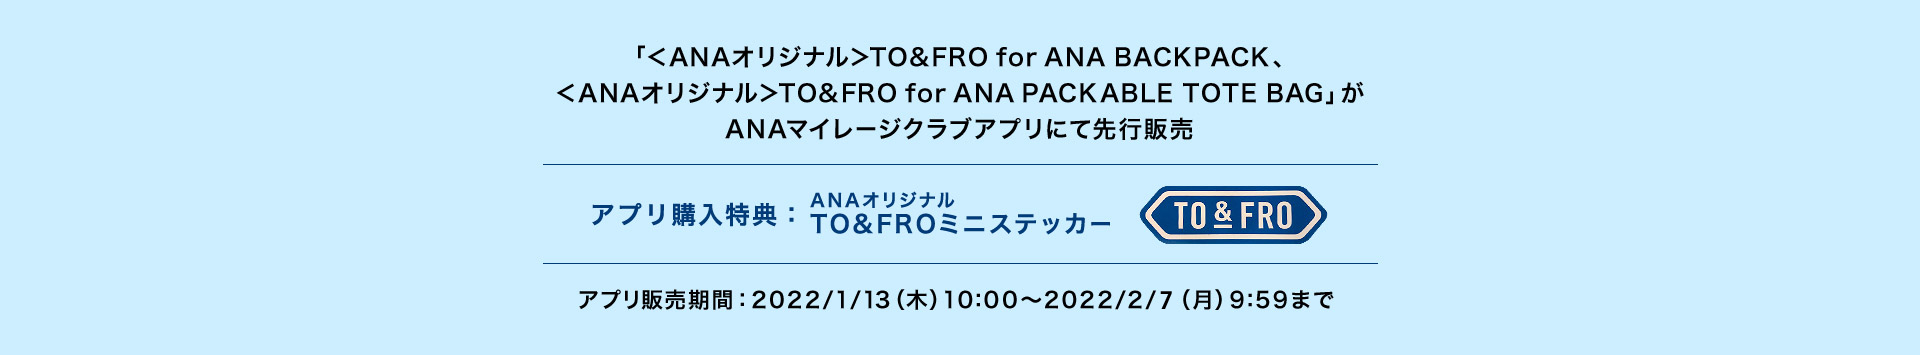 「＜ANAオリジナル＞TO&FRO for ANA BACKPACK、＜ANAオリジナル＞TO&FRO for ANA PACKABLE TOTE BAG」がANAマイレージクラブアプリにて先行販売 アプリ購入特典：ANAオリジナルTO&FROミニステッカー アプリ販売期間：2022/1/13（木）10:00～2022/2/14（月）9:59まで